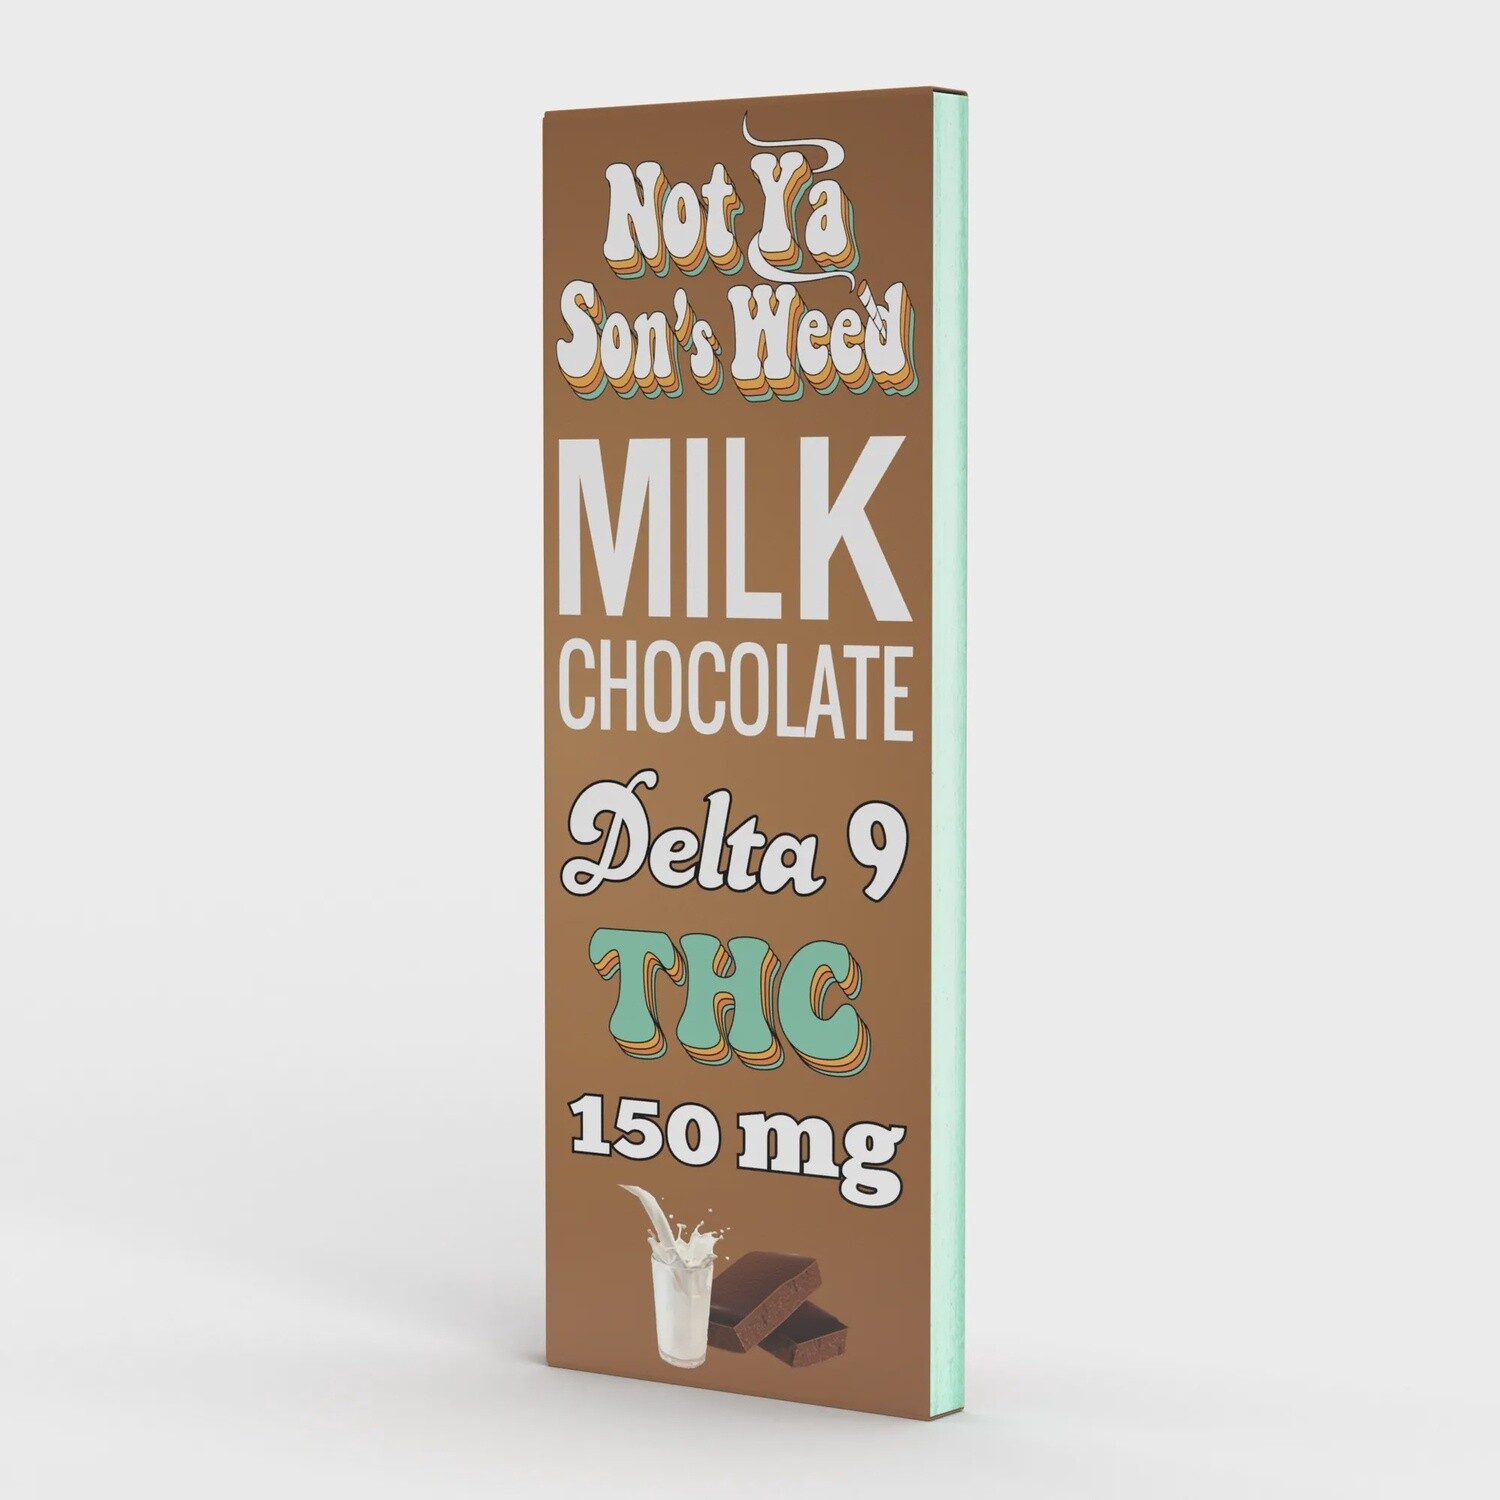 NYSW Delta 9 Milk Chocolate Candy Bar - 150mg